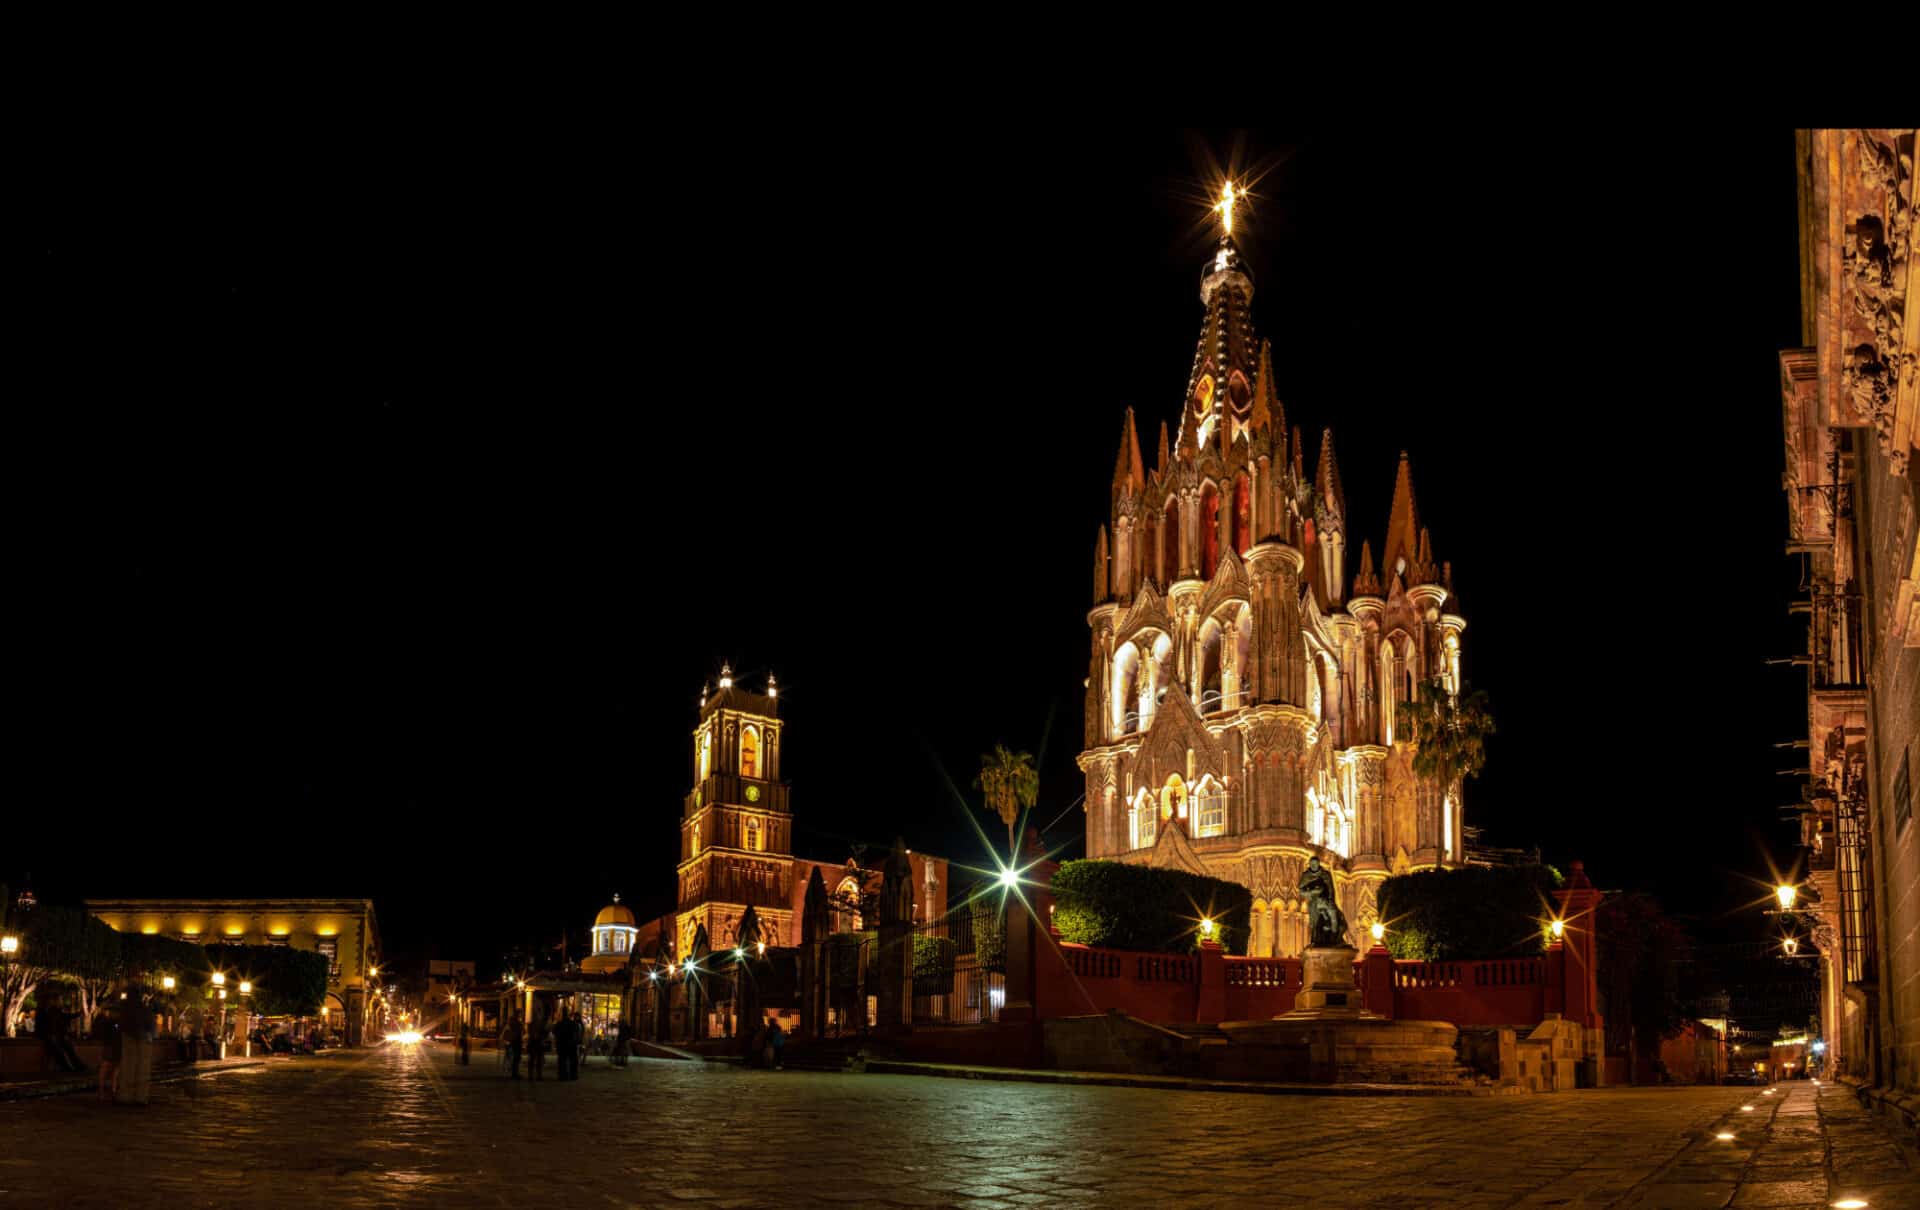 San Miguel de Allende Cathedral lit up at night